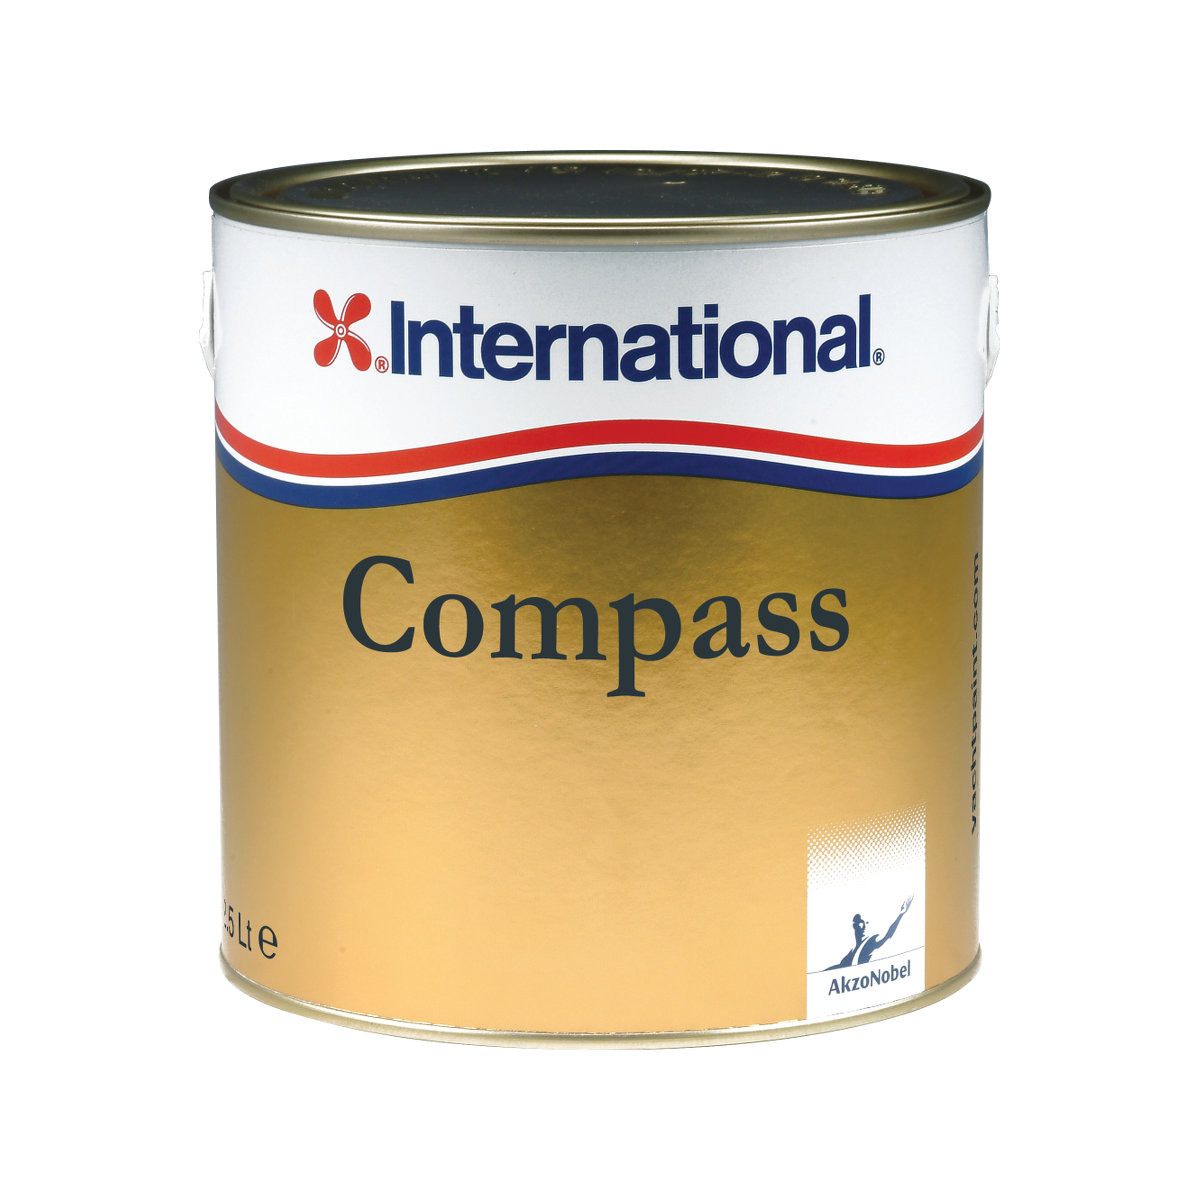 International Compass Klarlack